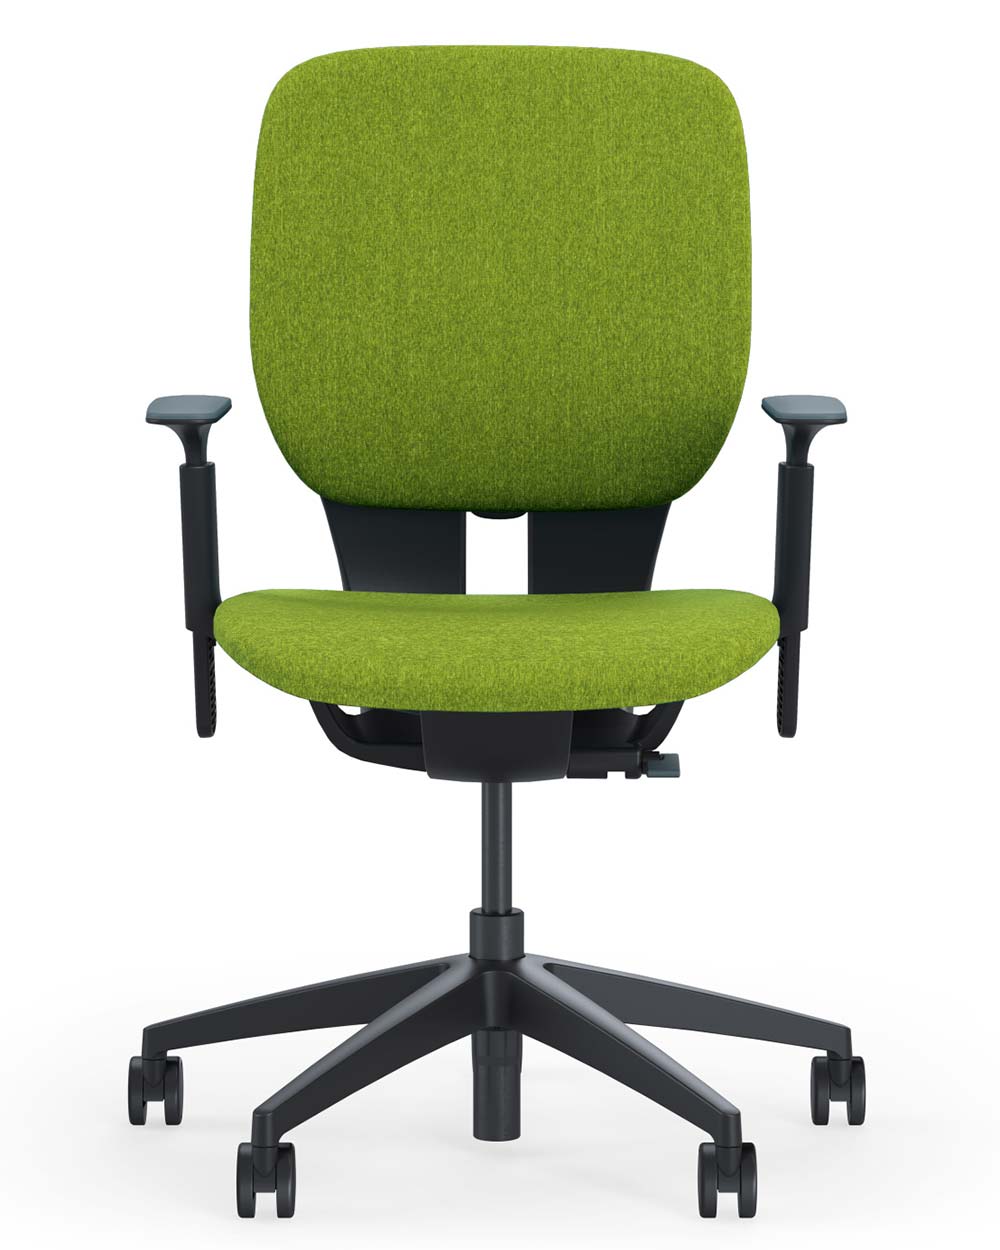 Klöber LIM (P990) Drehstuhl, Sitz und Rücken gepolstert, grün